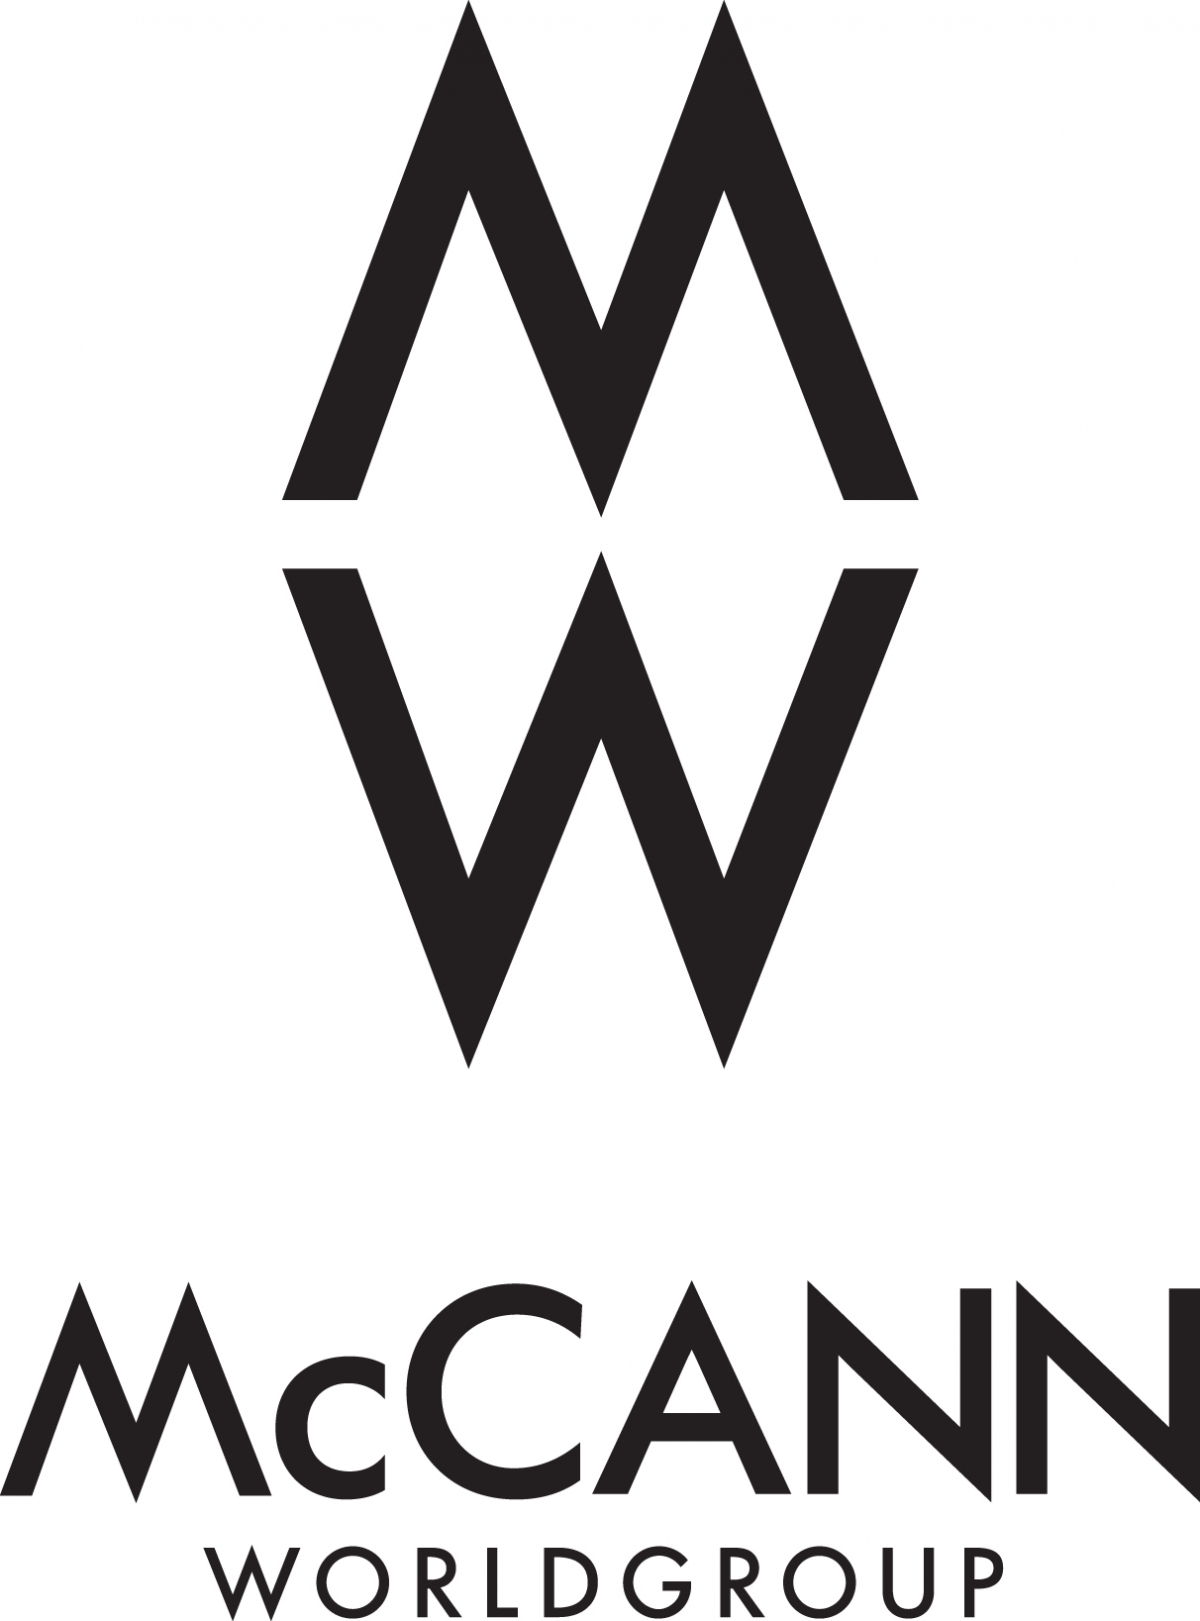 McCann Worldwide